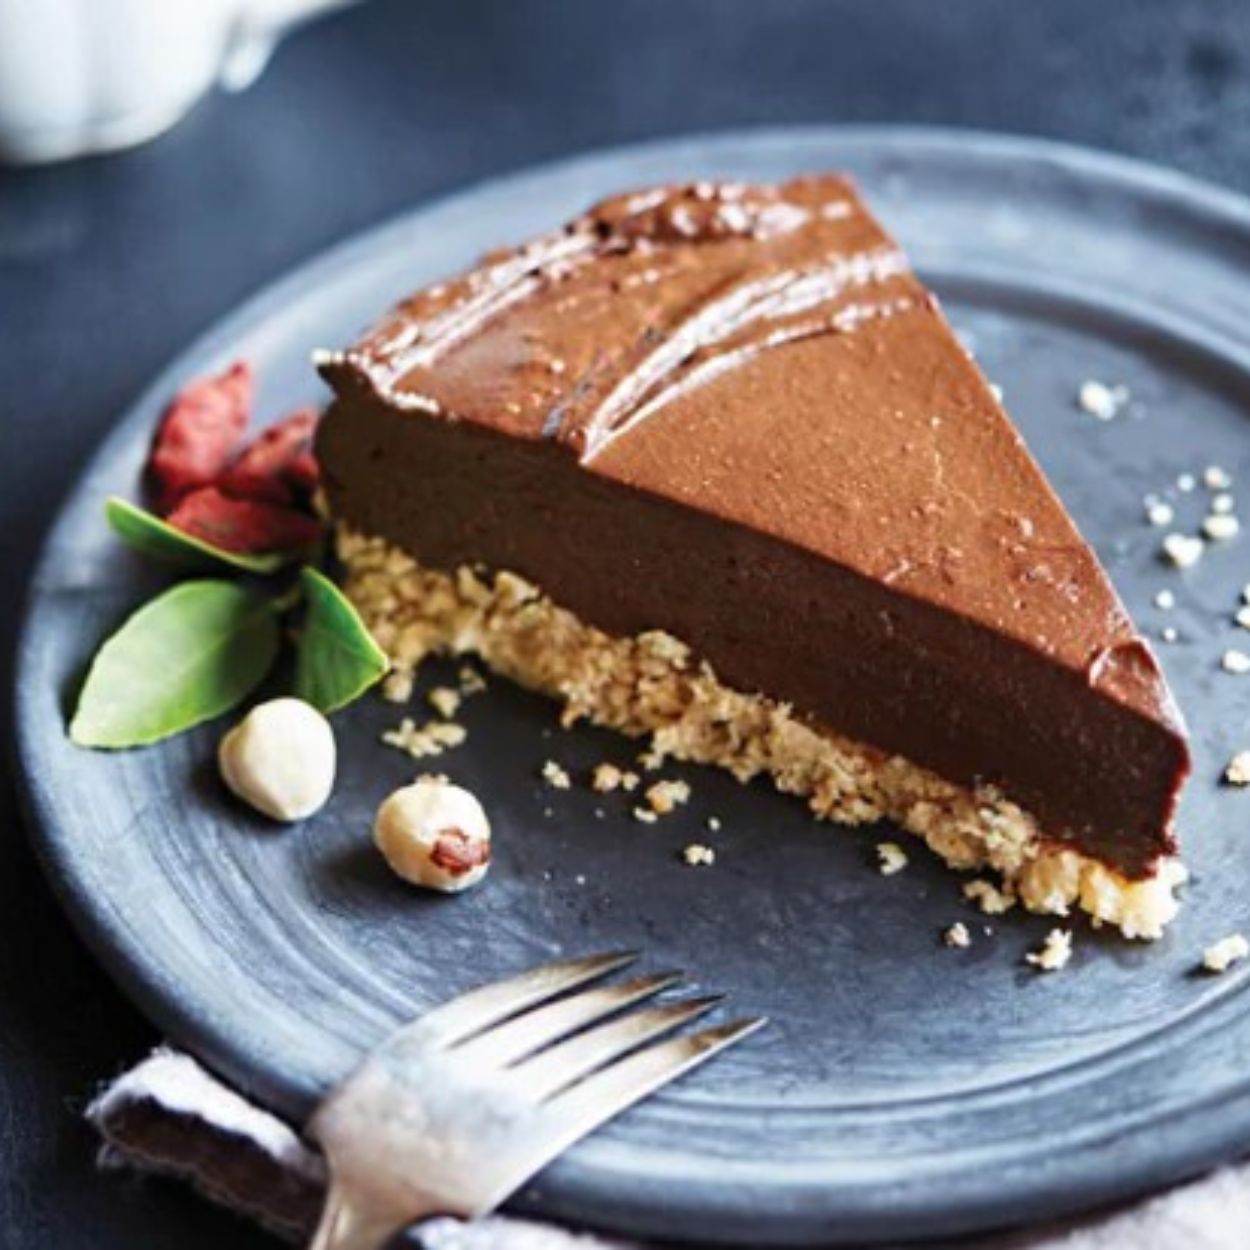 Pročitajte više o članku Novi desert za Uskrs: veganska čokoladna torta